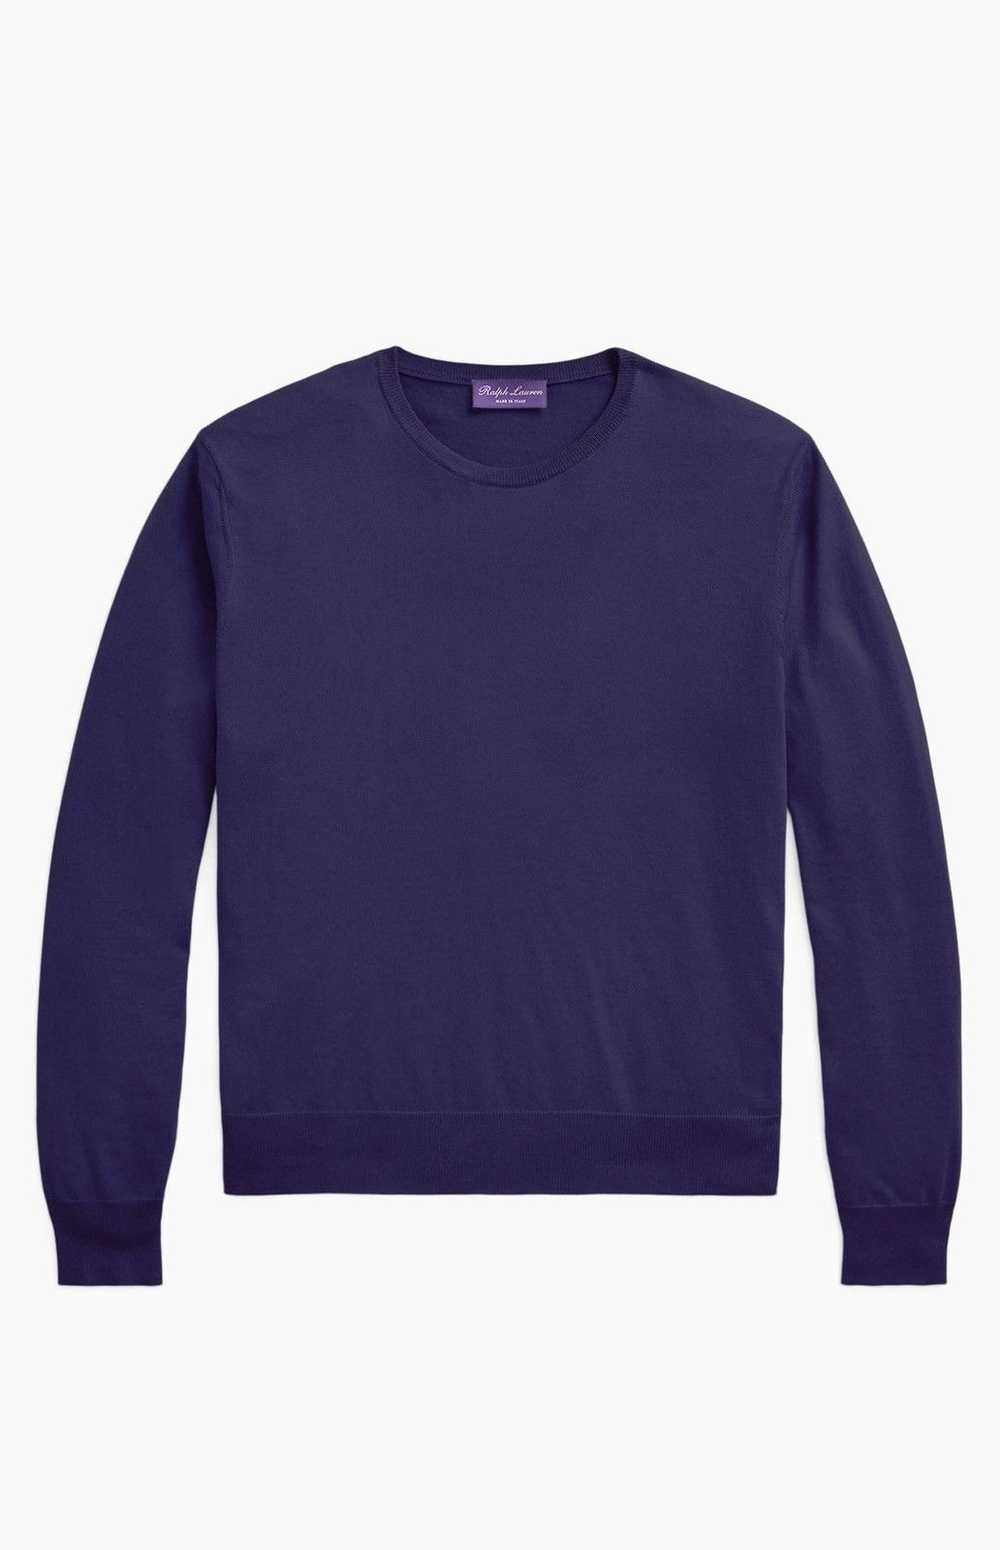 Ralph Lauren Crewneck Cotton Sweater - image 1